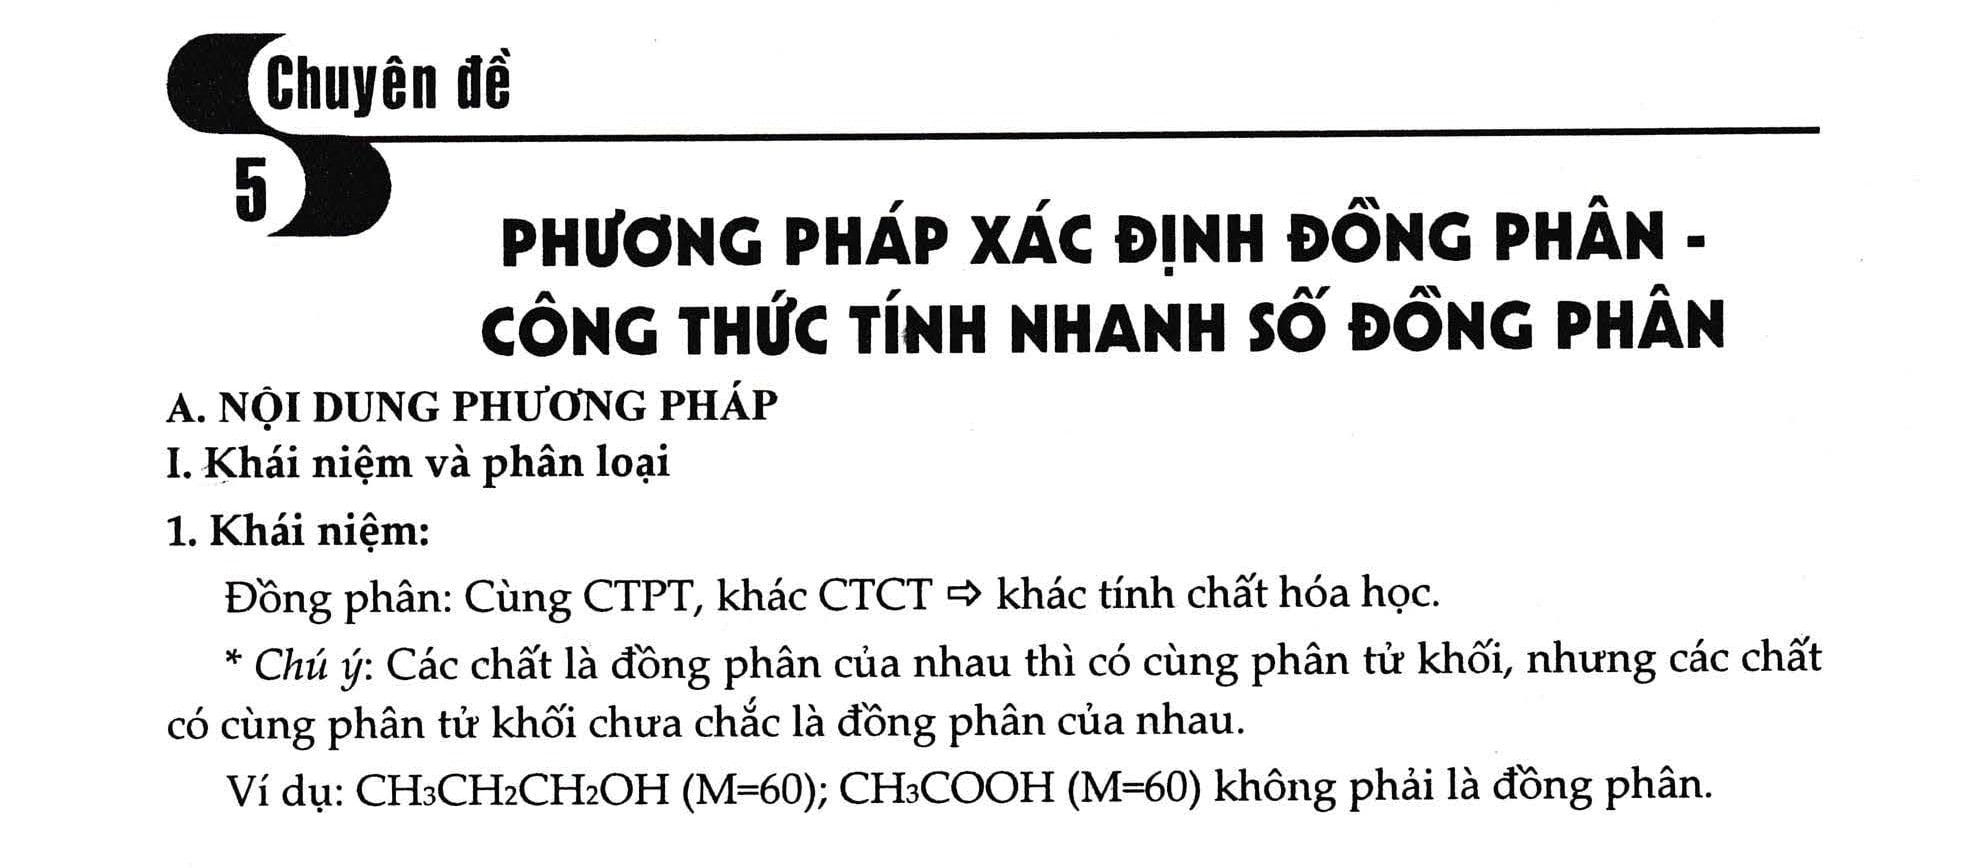 phuong phap xac dinh dong phan cong thuc tinh nhanh so dong phan hop chat huu co 1